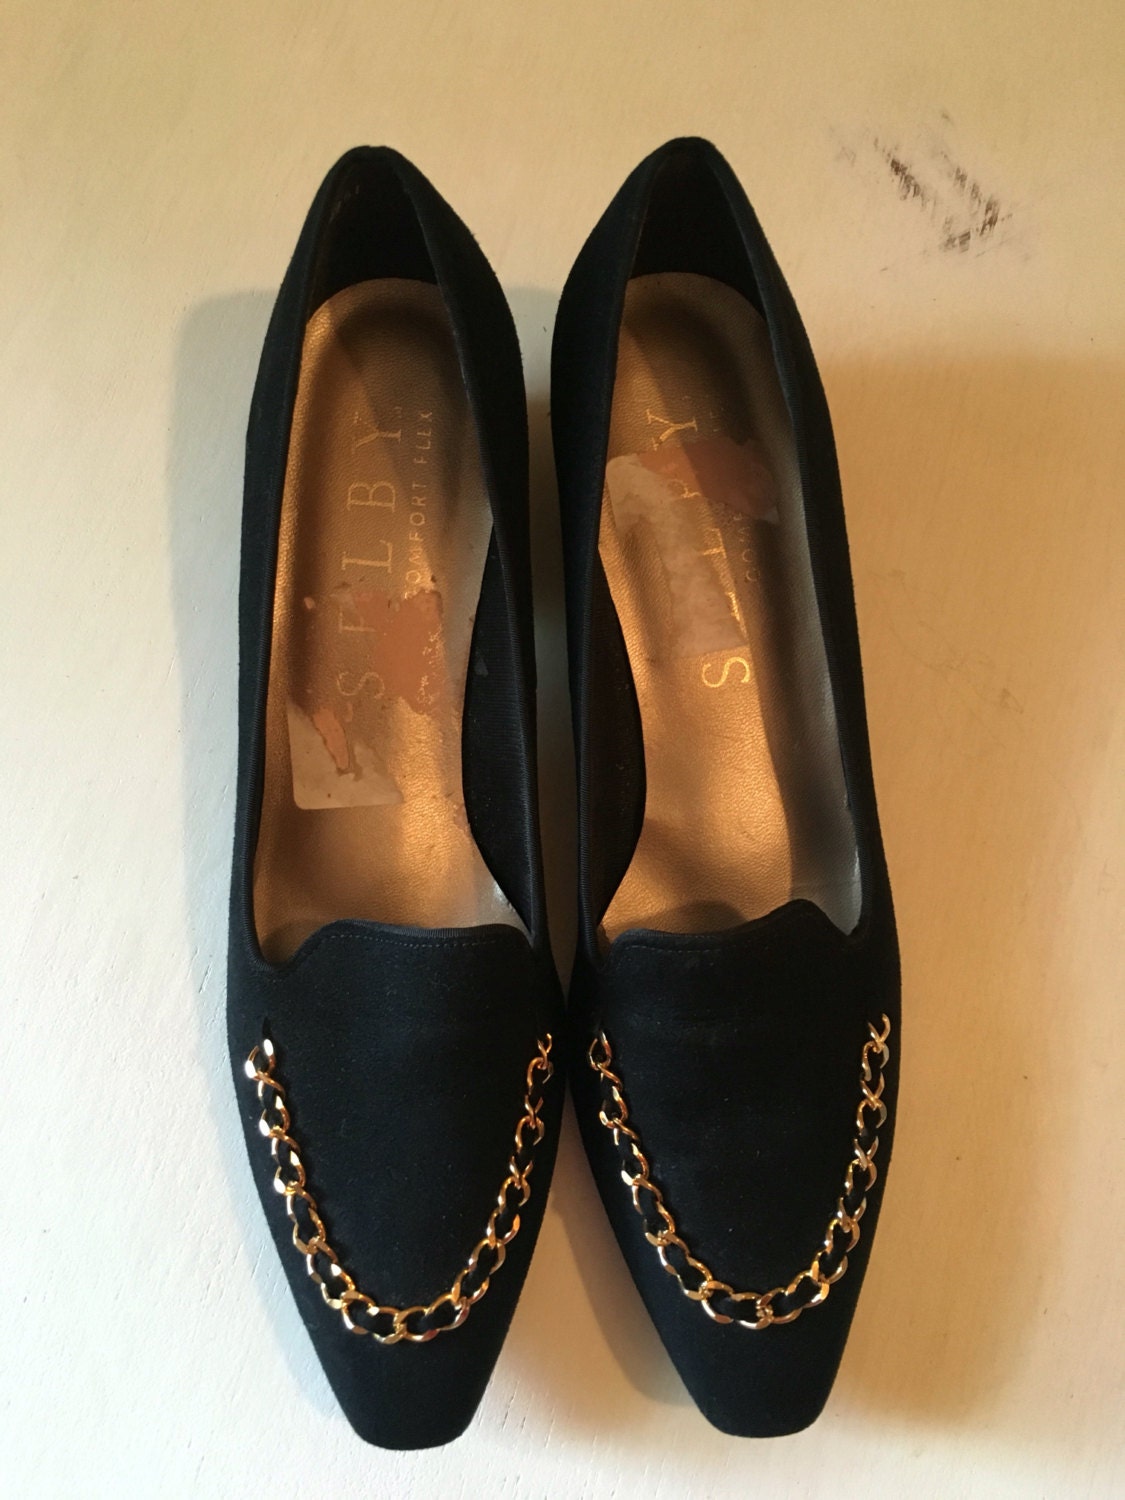 Reserved for Laura K. Vintage Black Suede Kitten Heels with